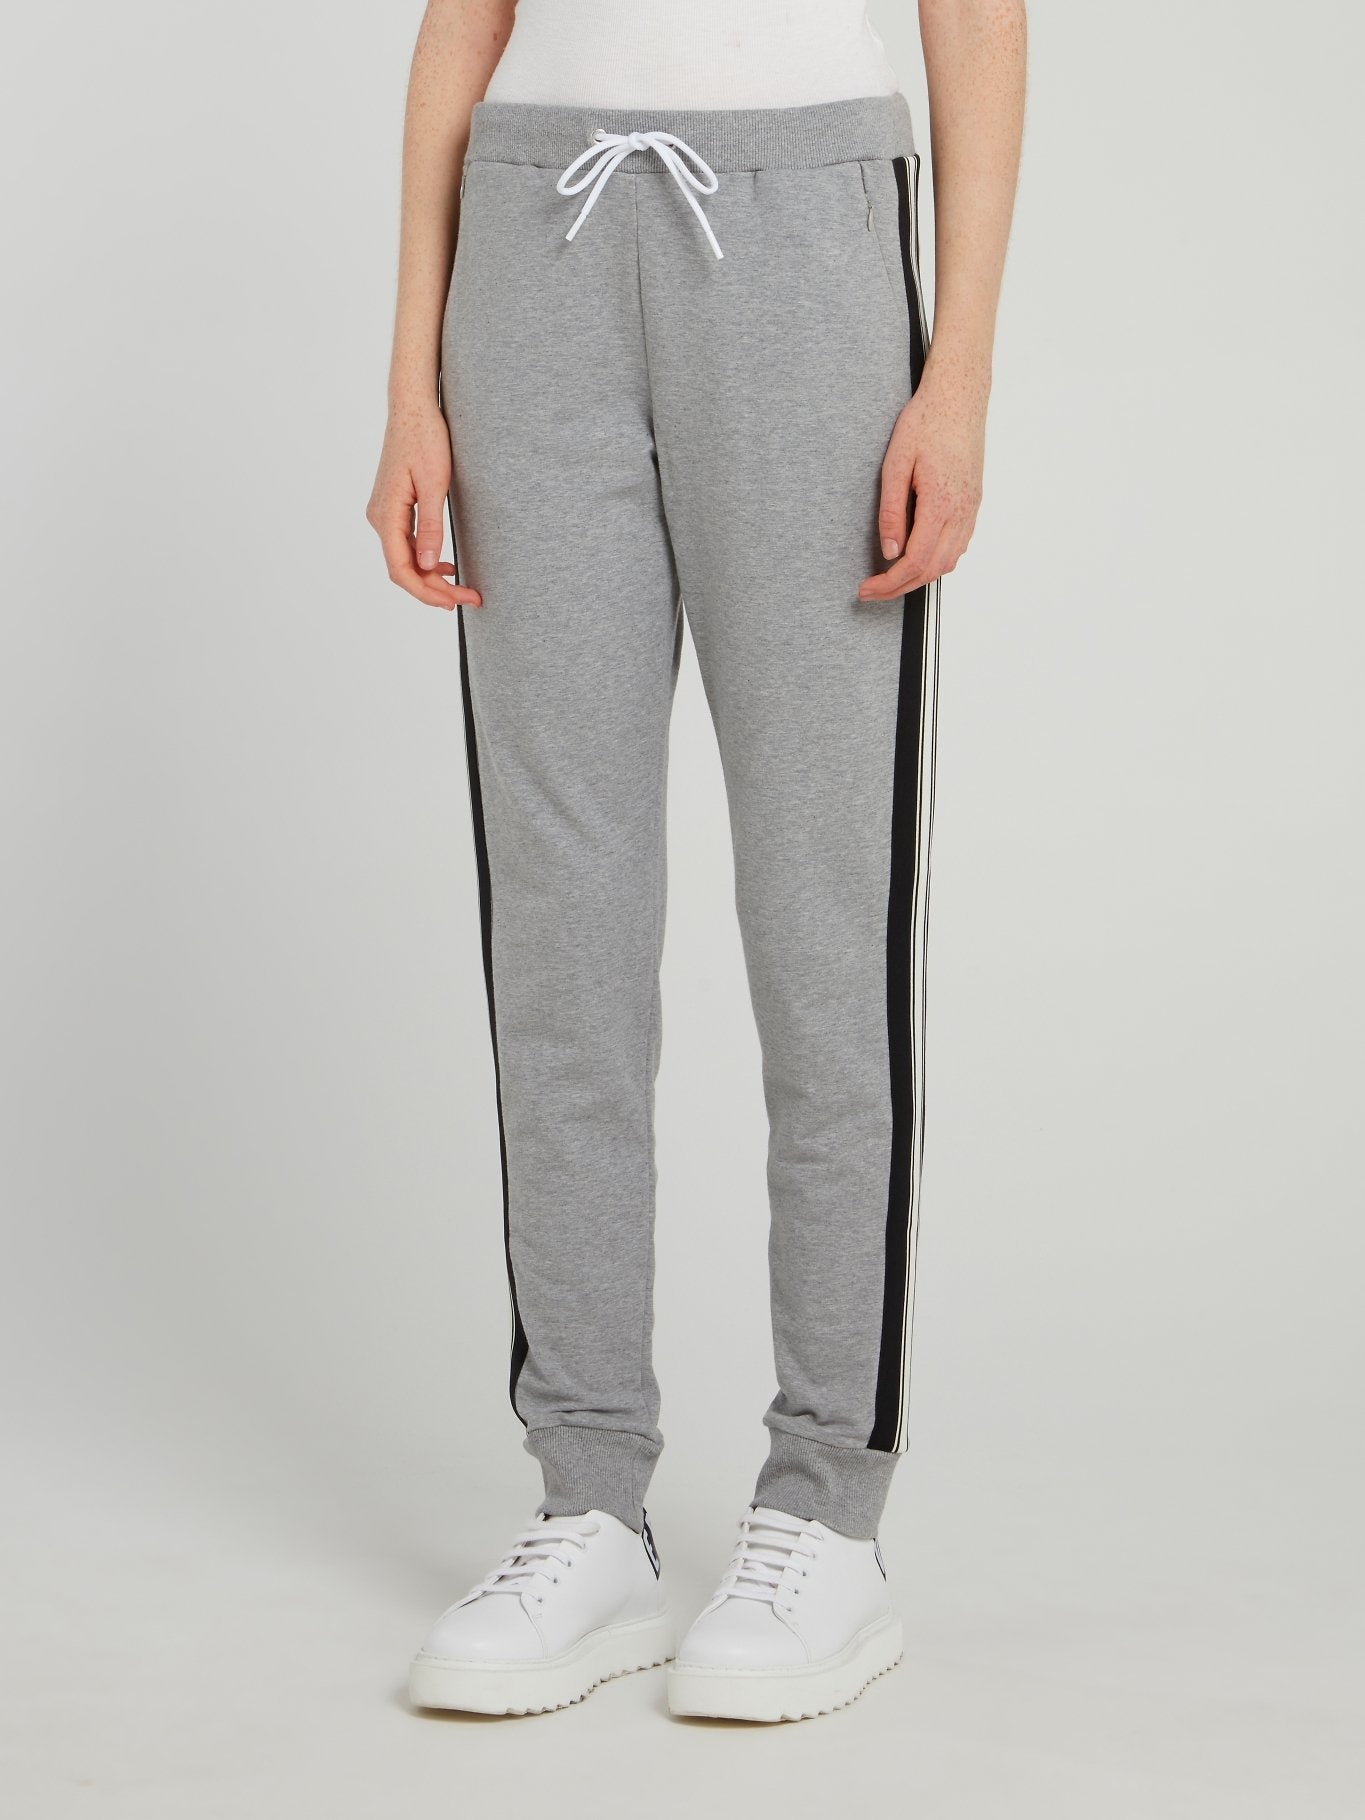 Grey Drawstring Fleece Sweatpants